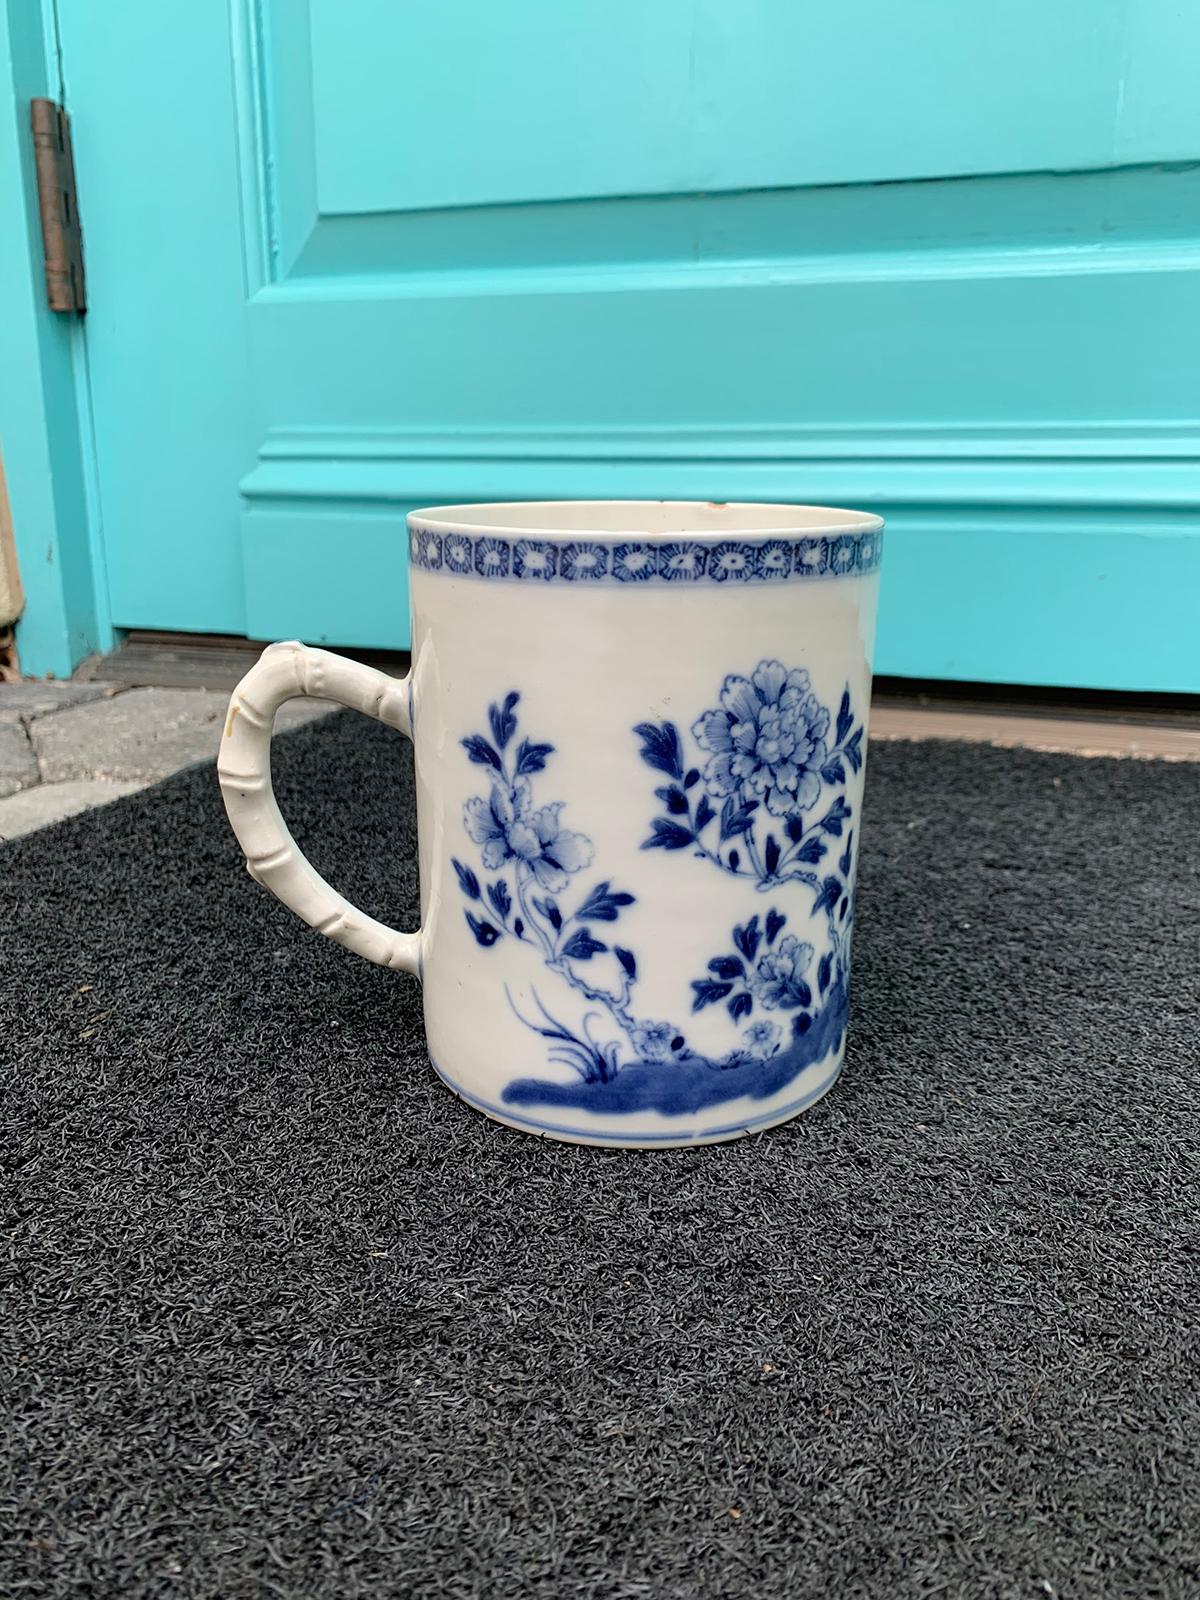 18th century Chinese export blue and white porcelain mug.